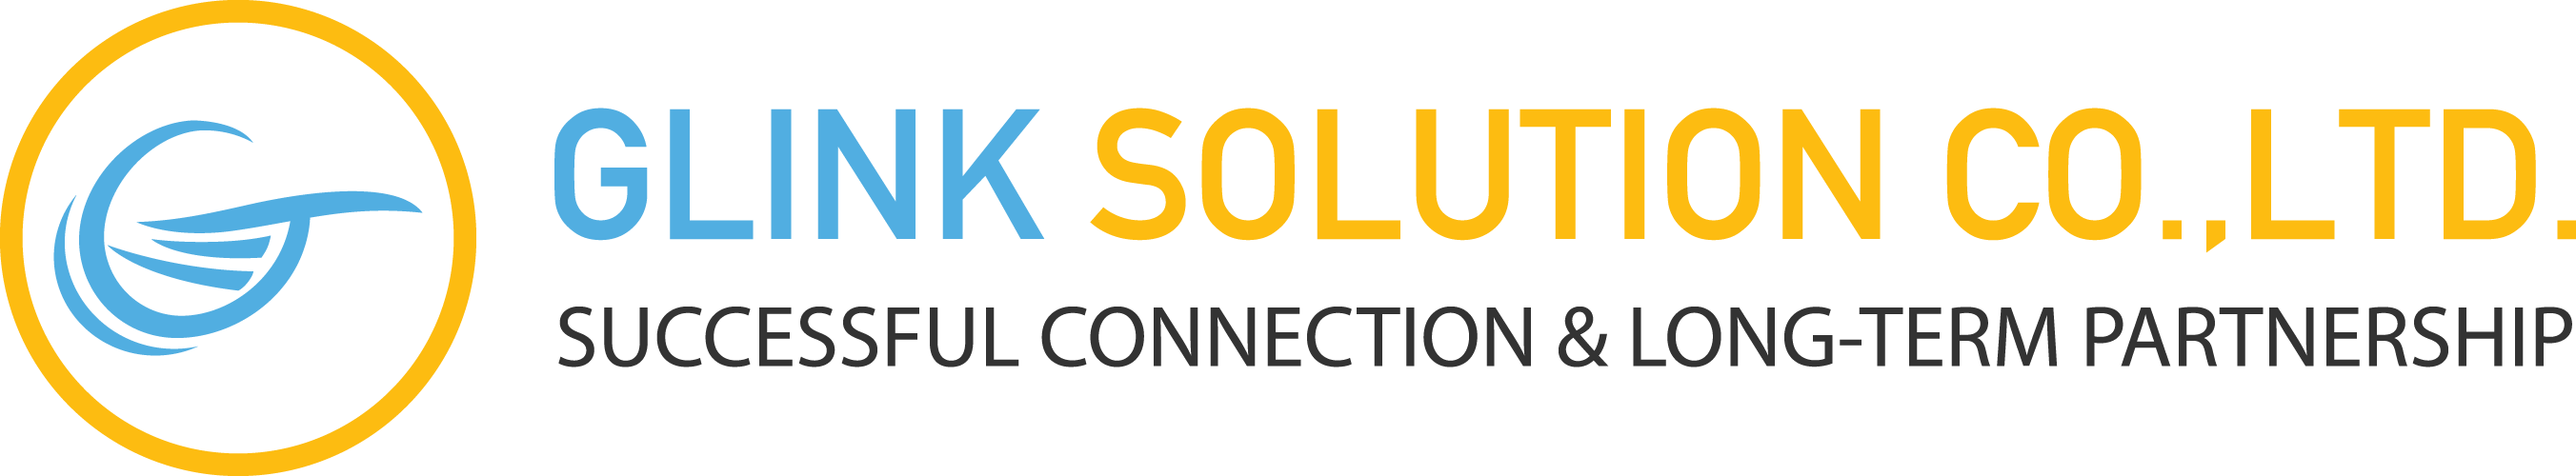 Glink Solution Co.,Ltd